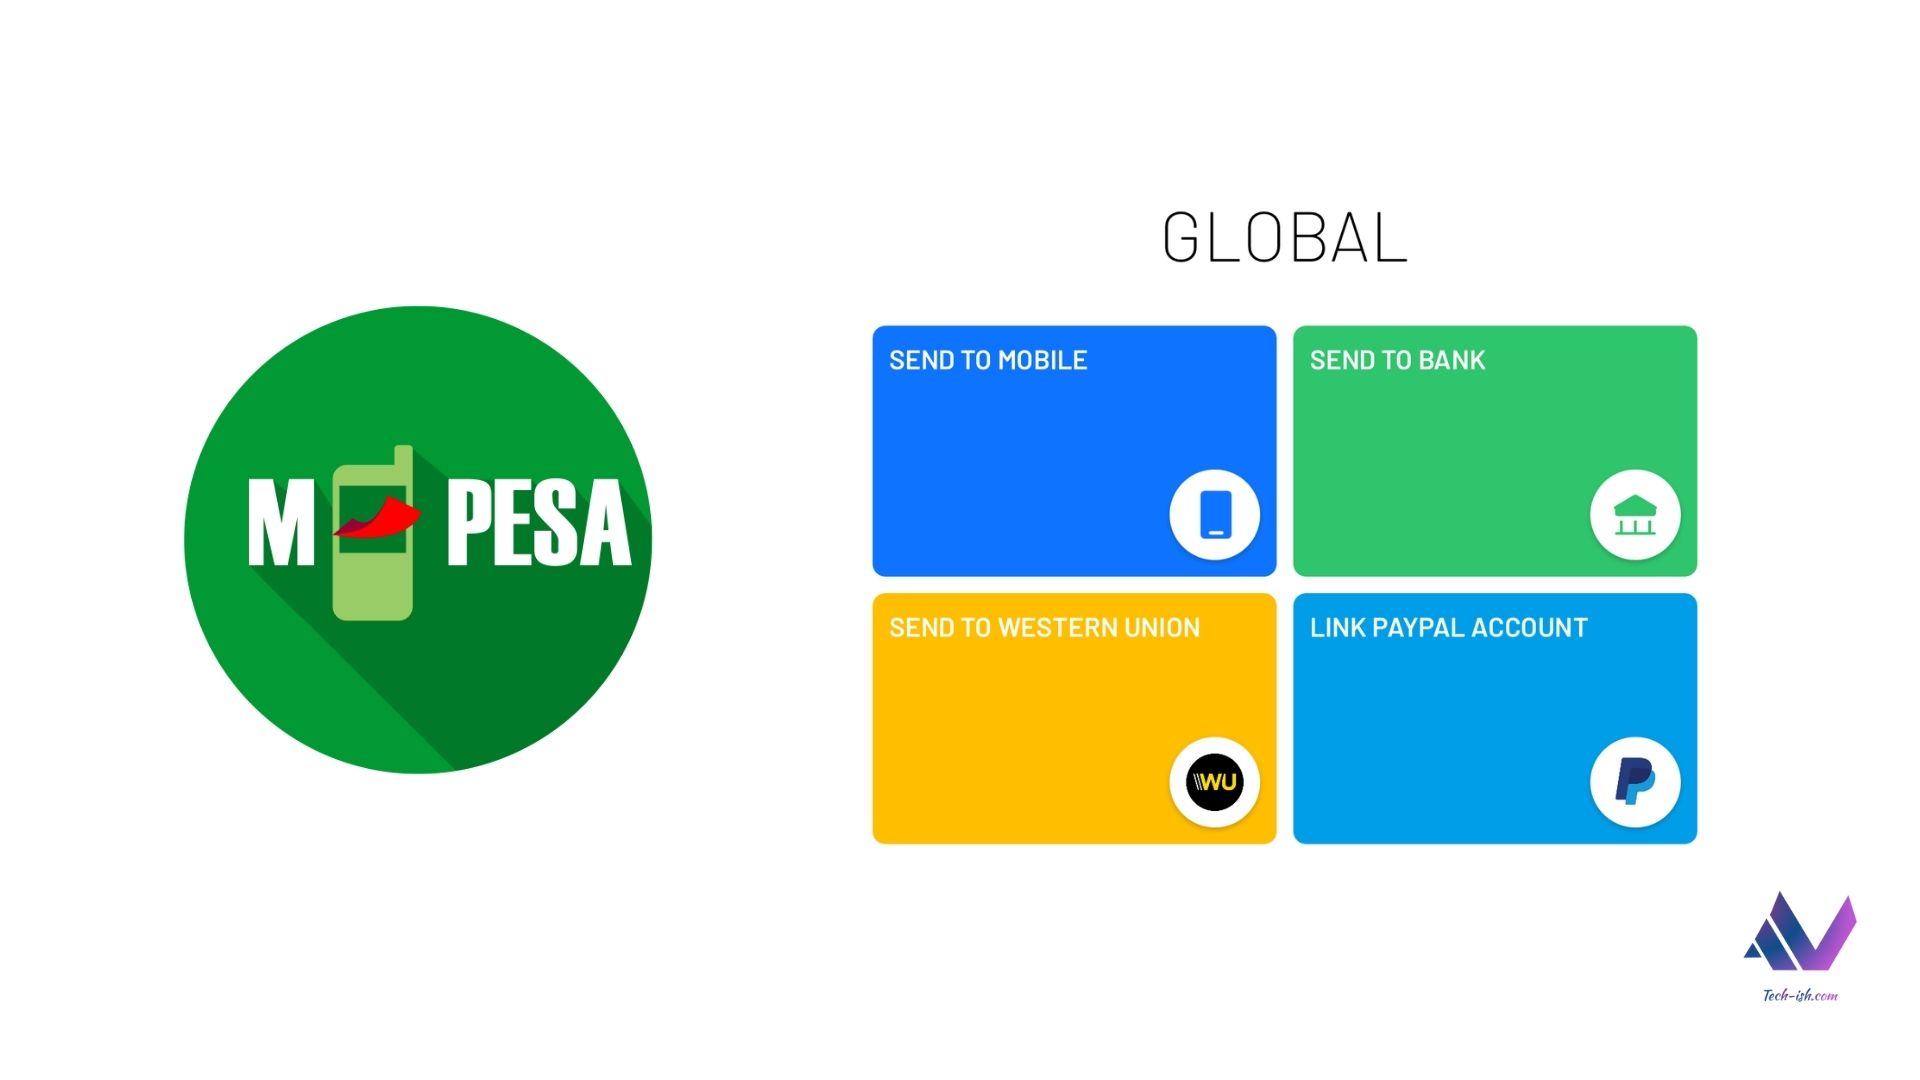 M-Pesa Global; How to send money internationally